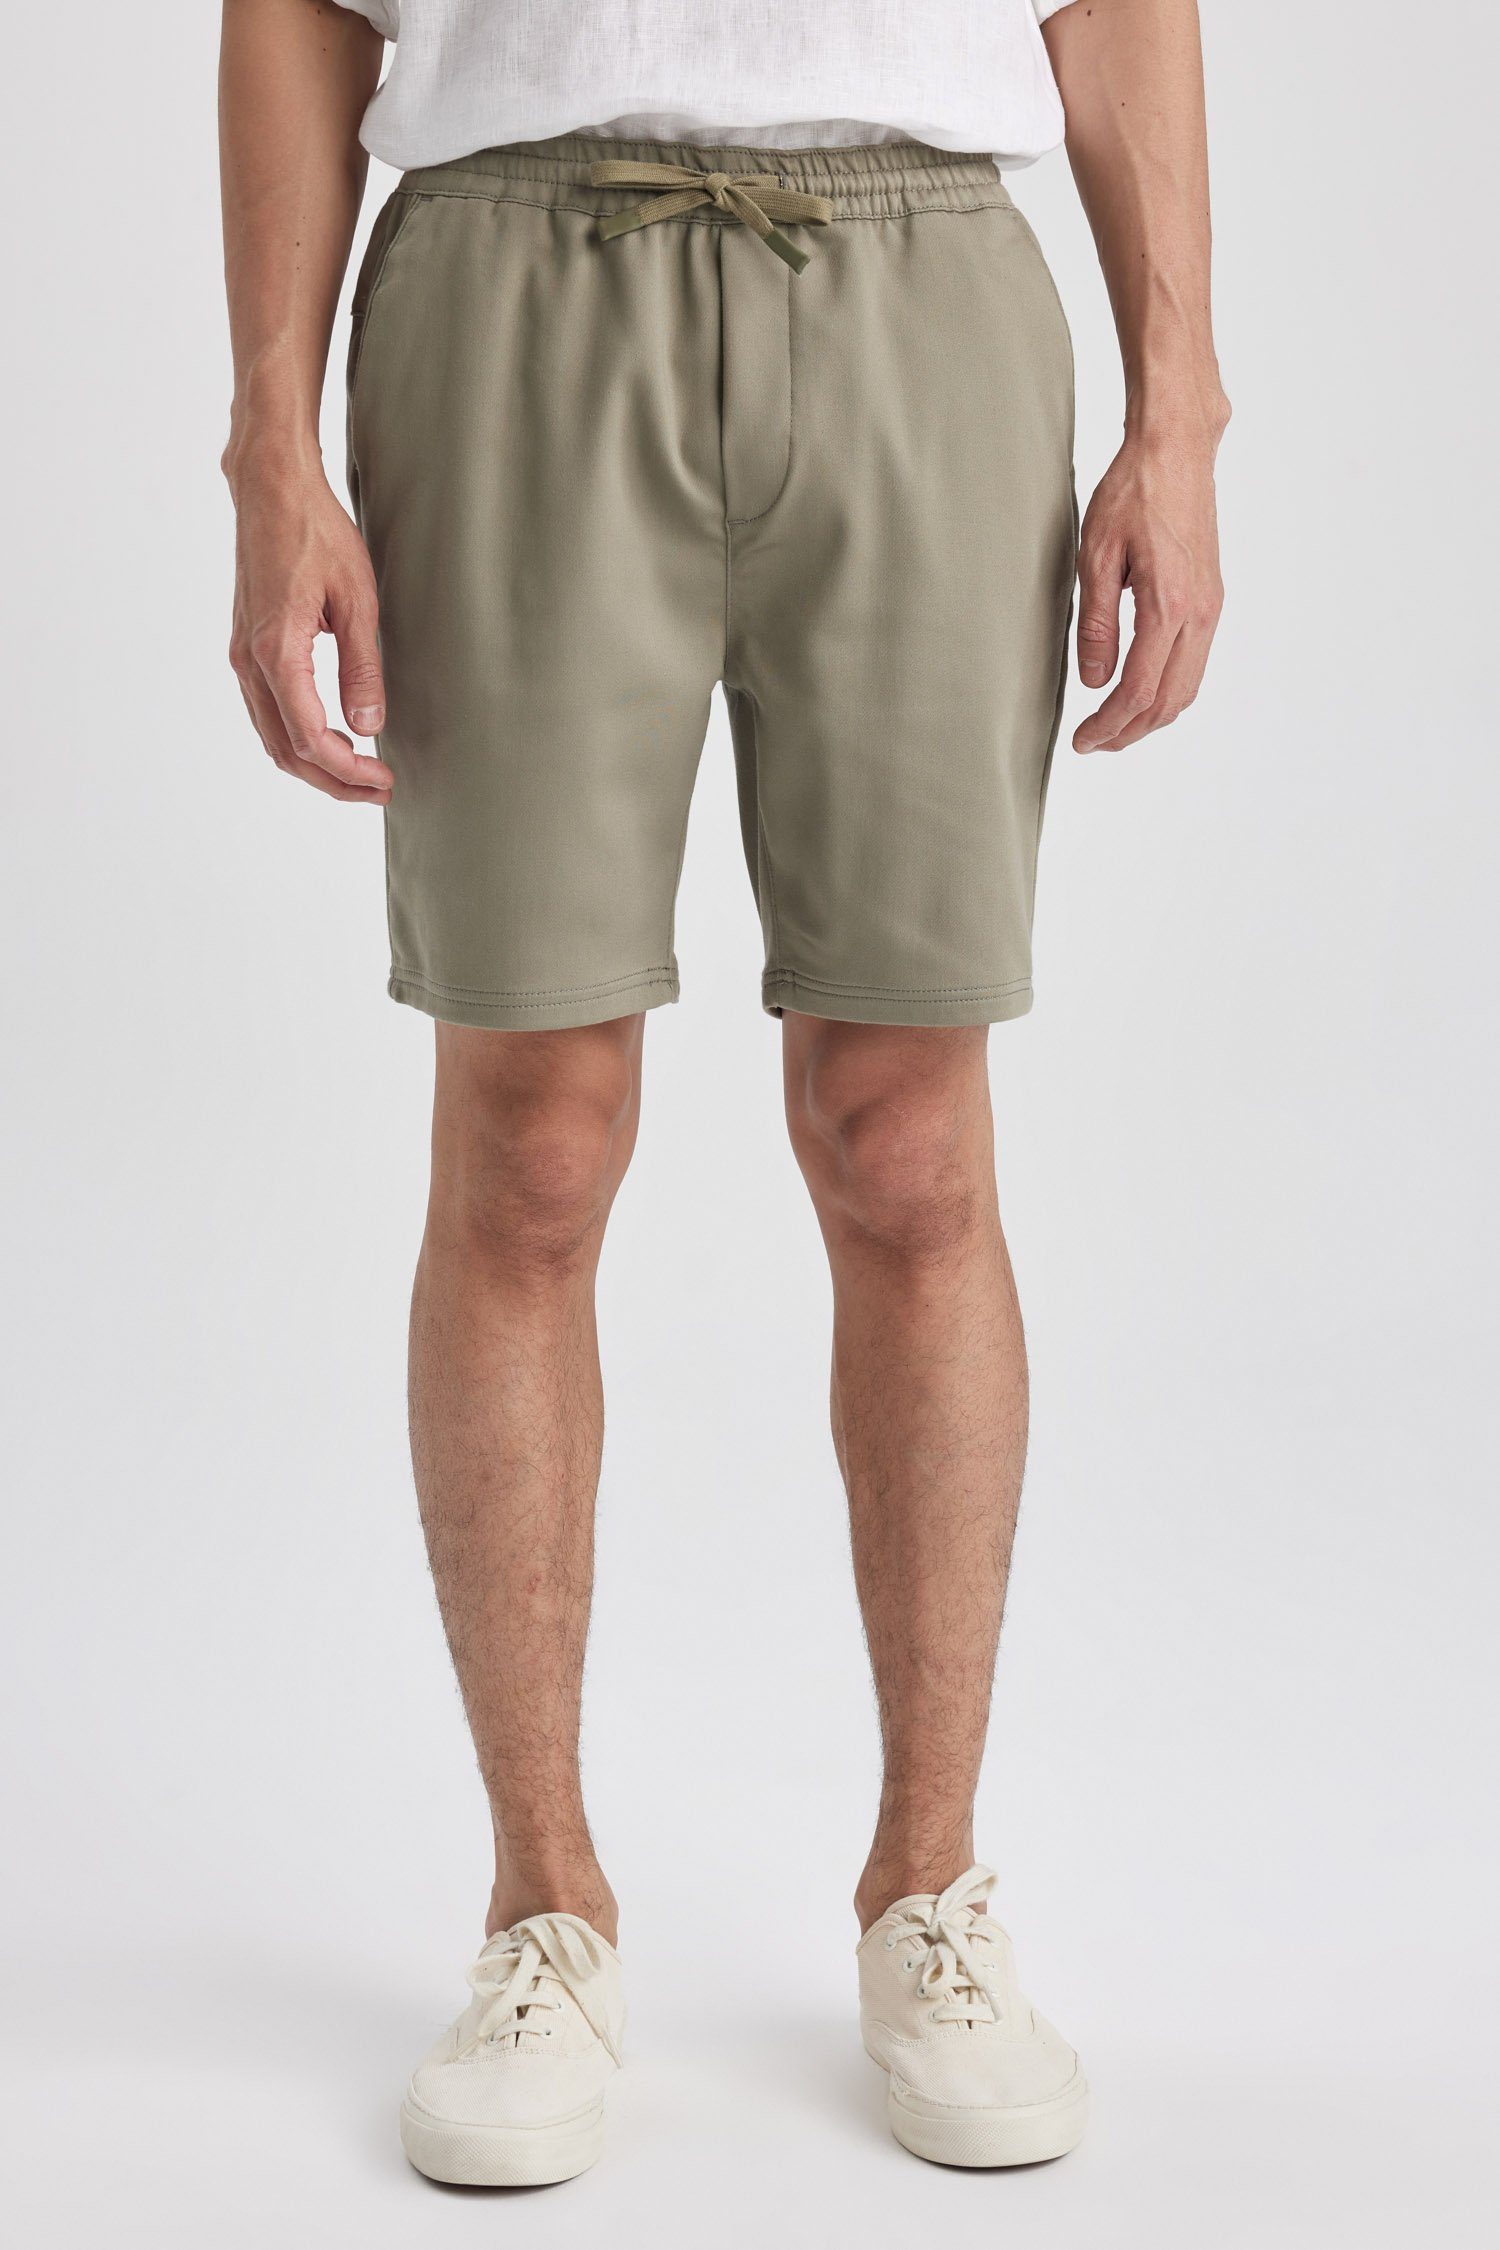 Neuer Produktshop DeFacto Shorts Khaki SLIM Shorts FIT